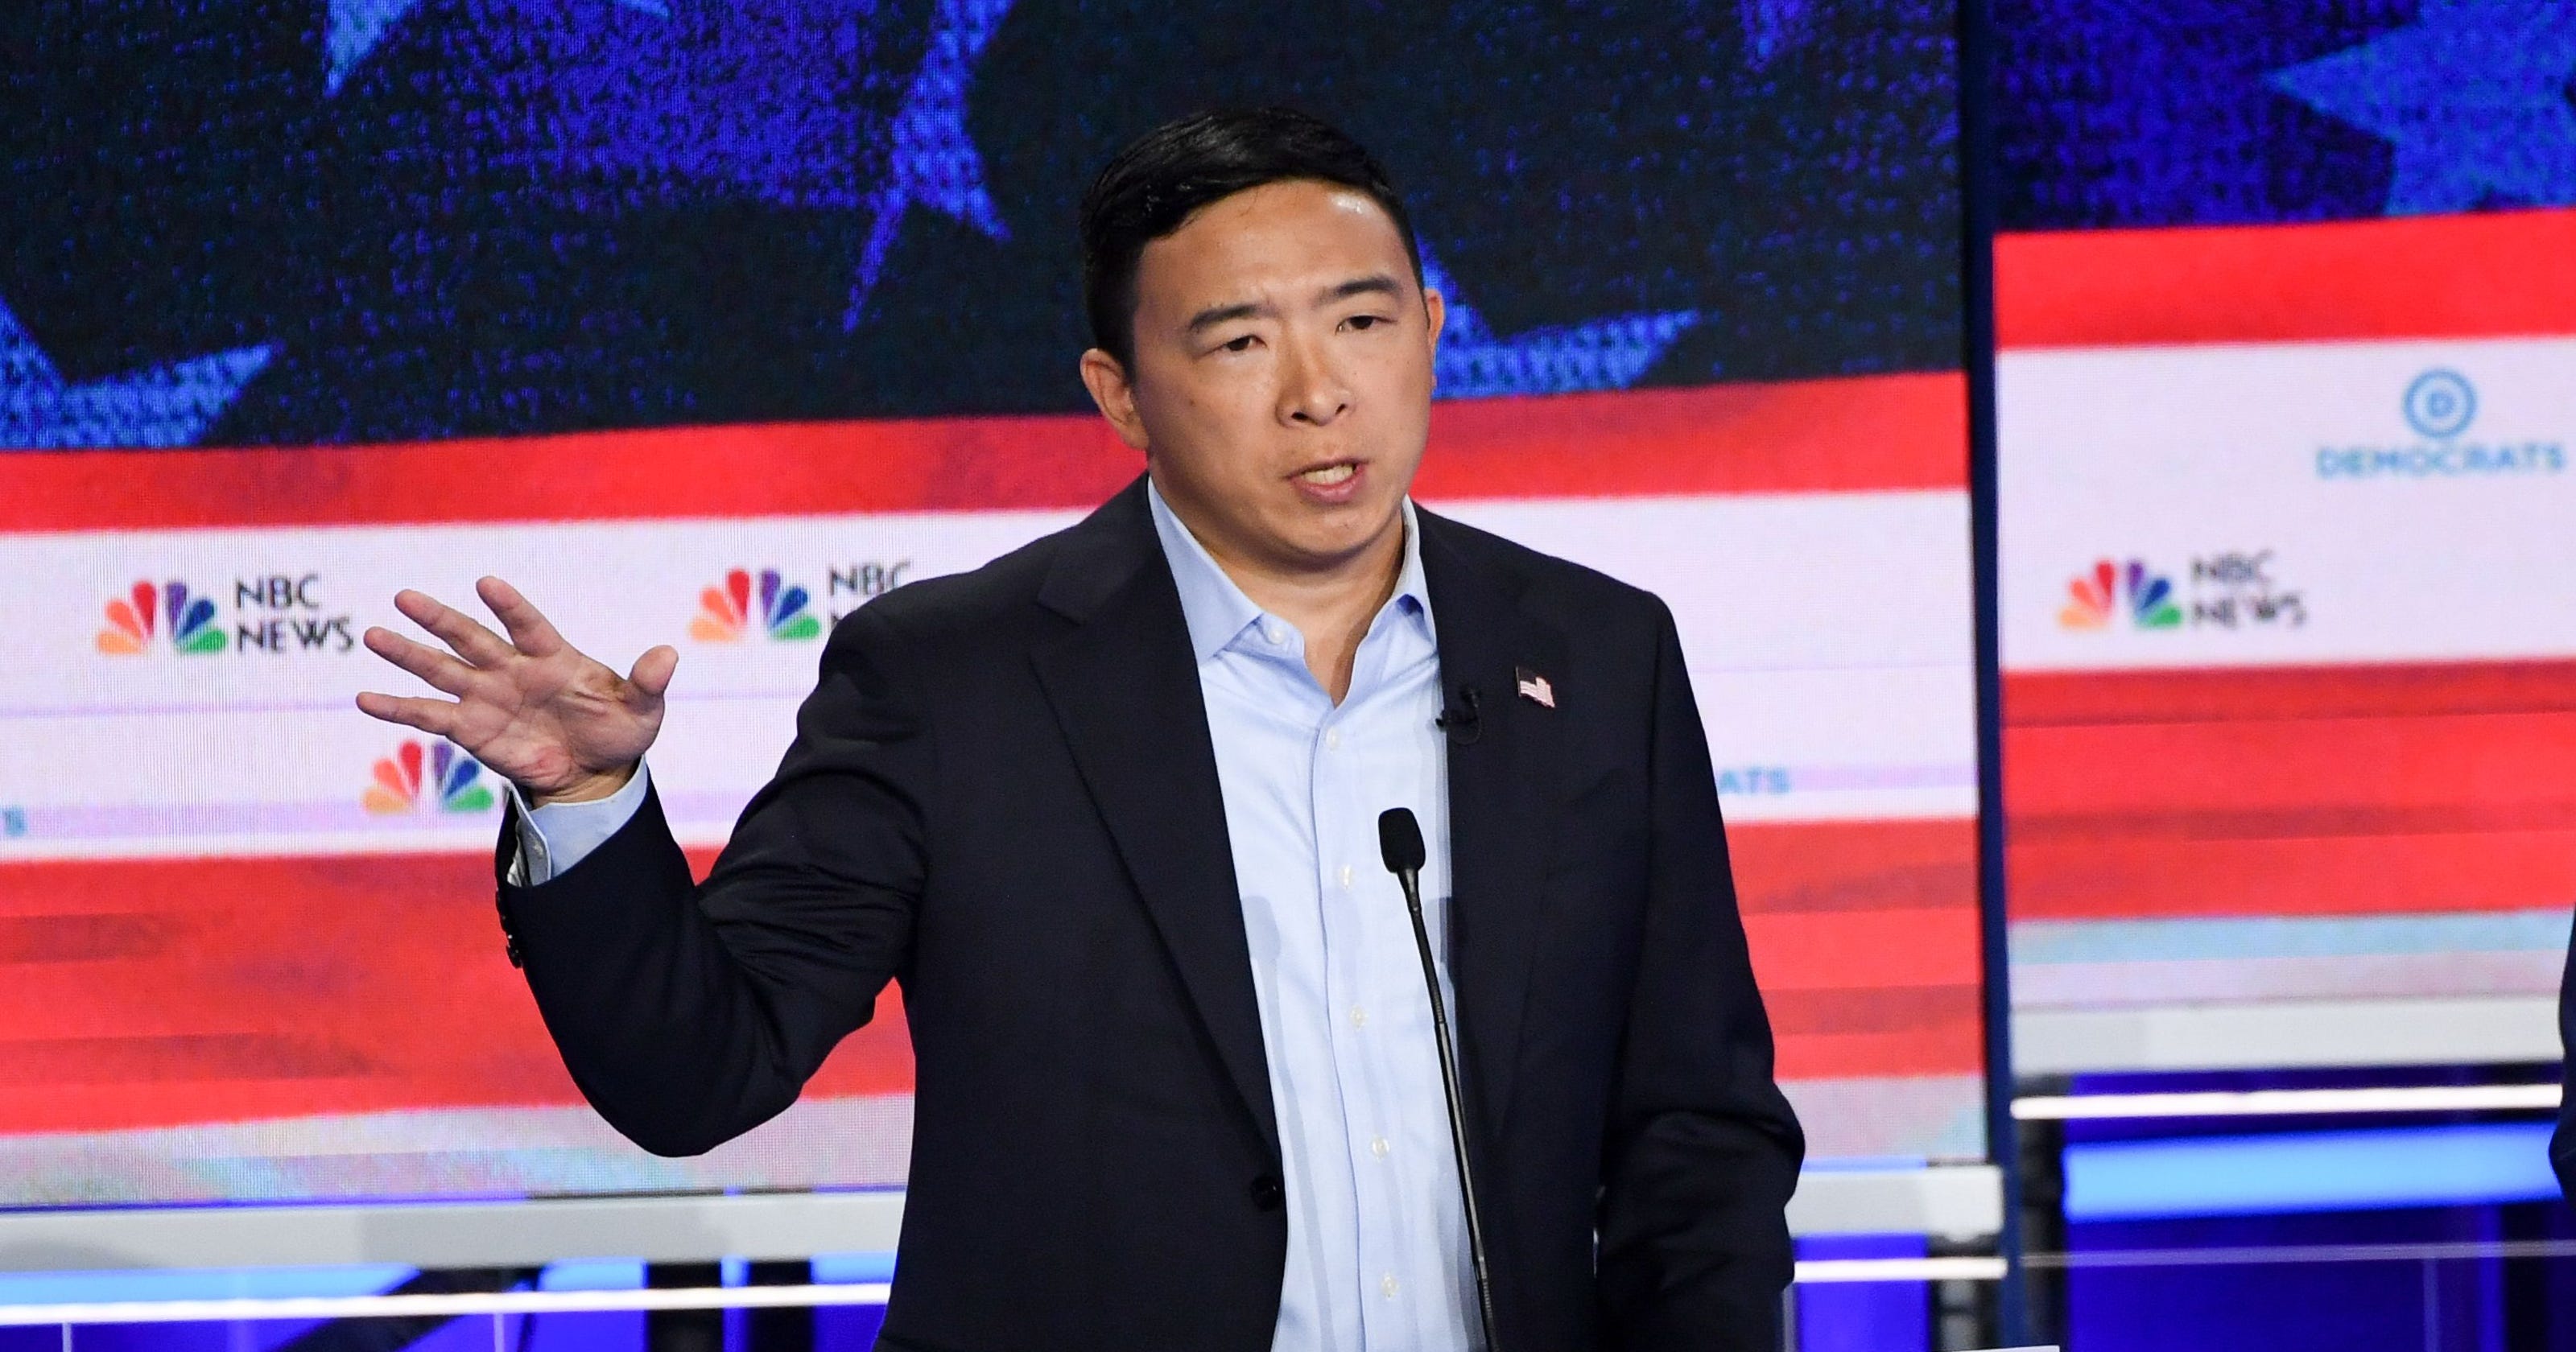 Democratic debate 2019: Andrew Yang scraps the tie for a casual look2975 x 1680